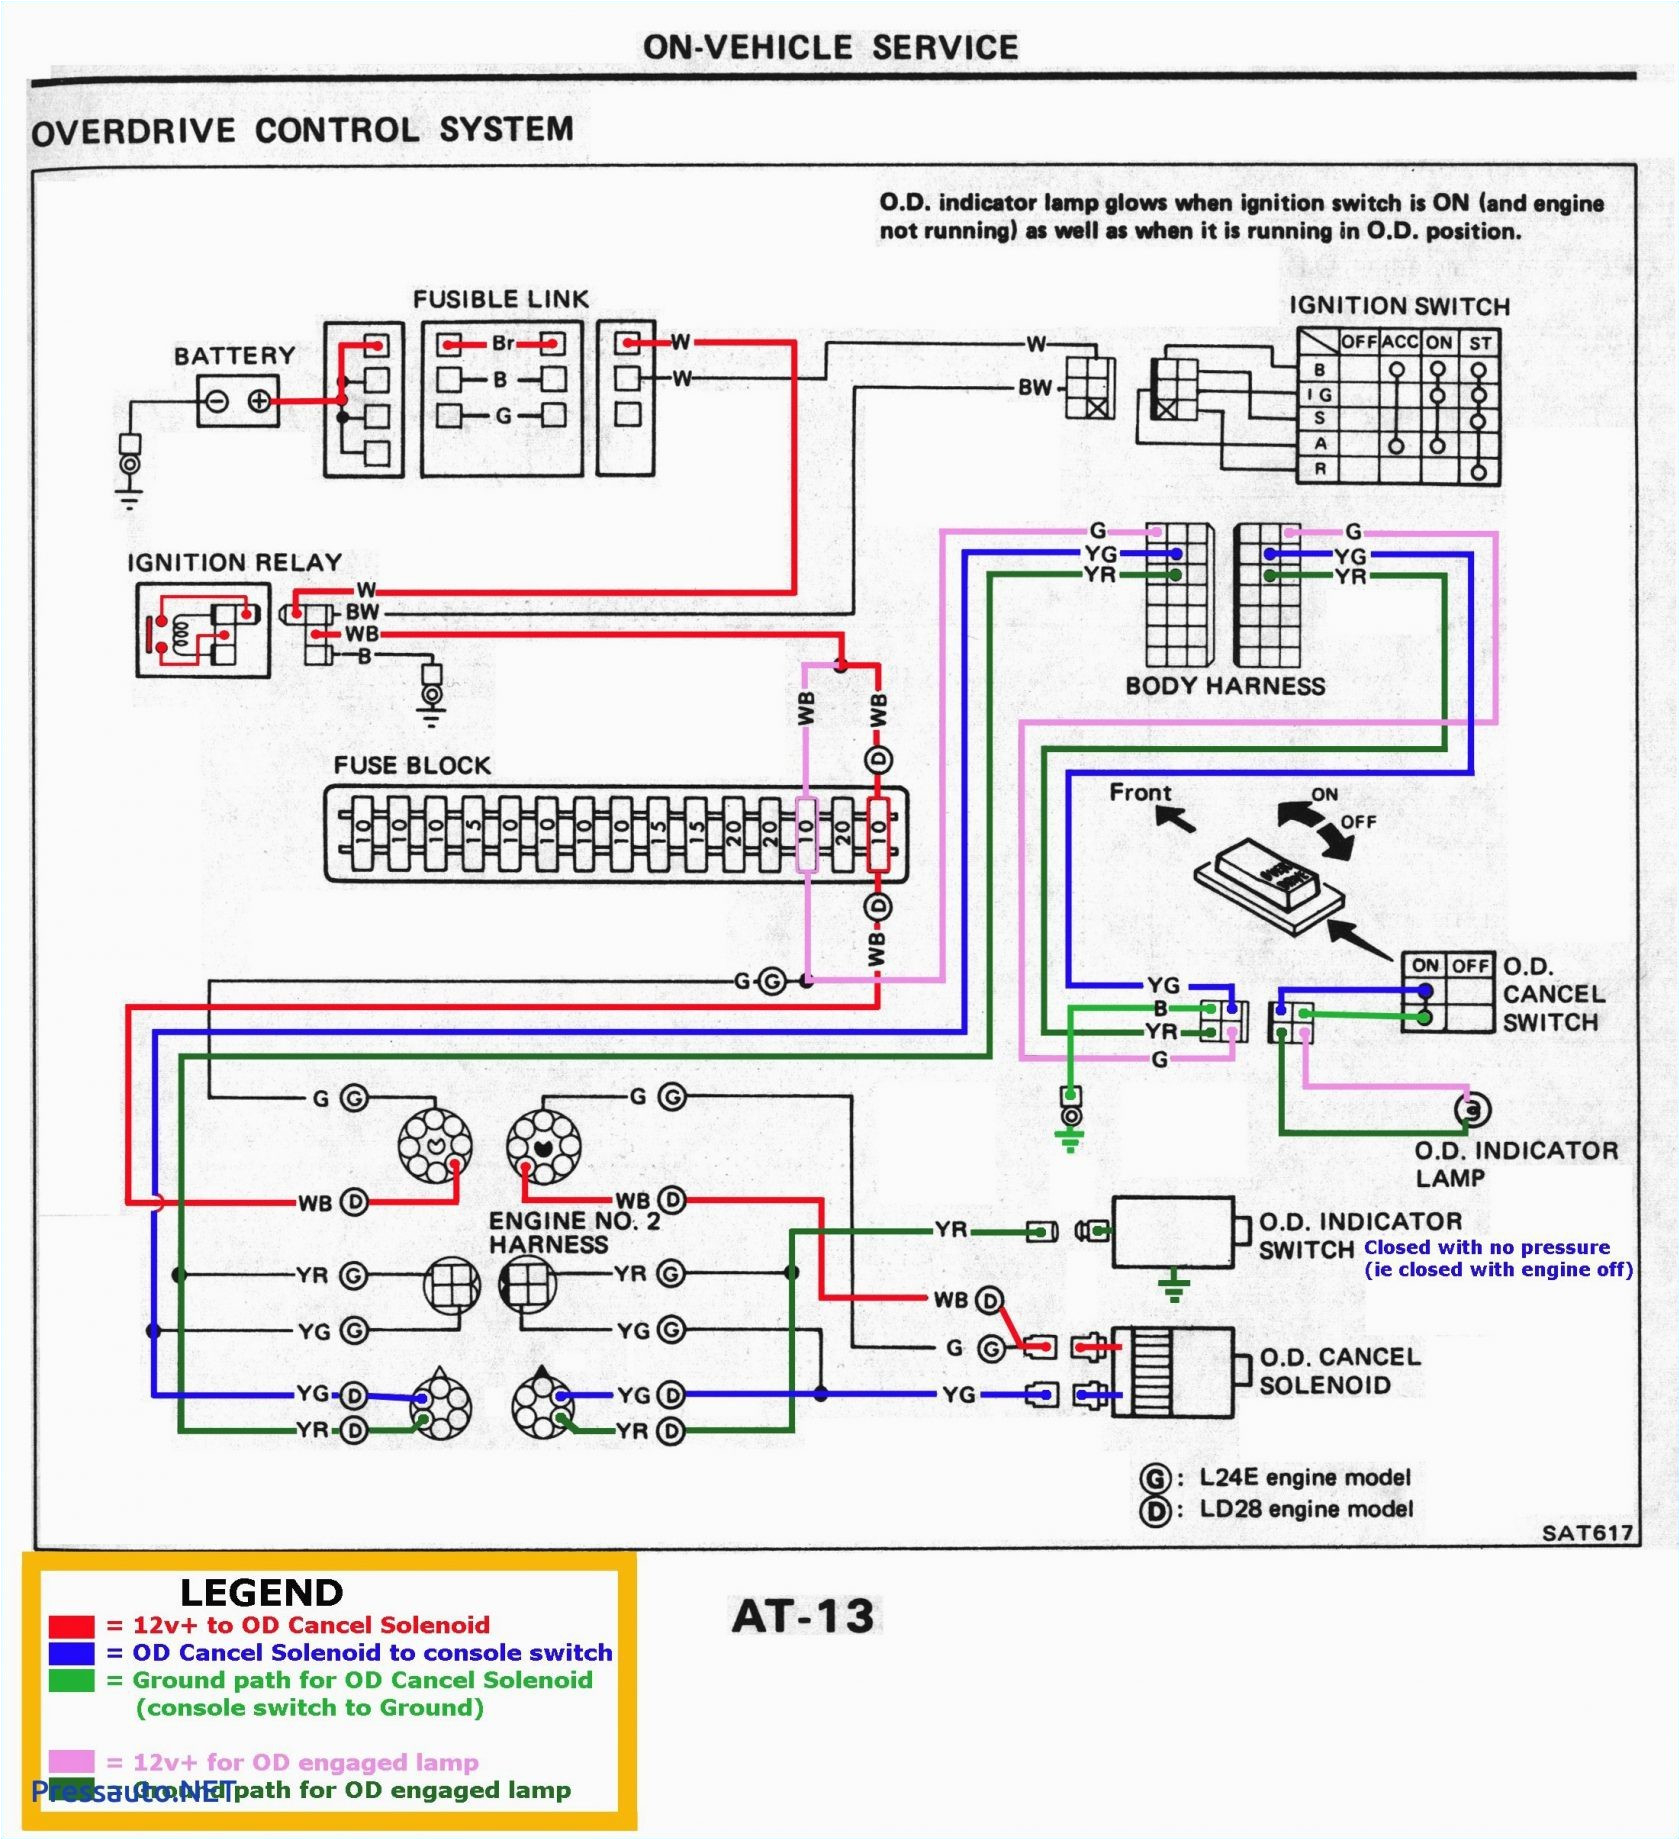 e46 headlight wiring diagram wiring diagram split bmw e46 xenon headlight wiring diagram e46 headlight wiring diagram